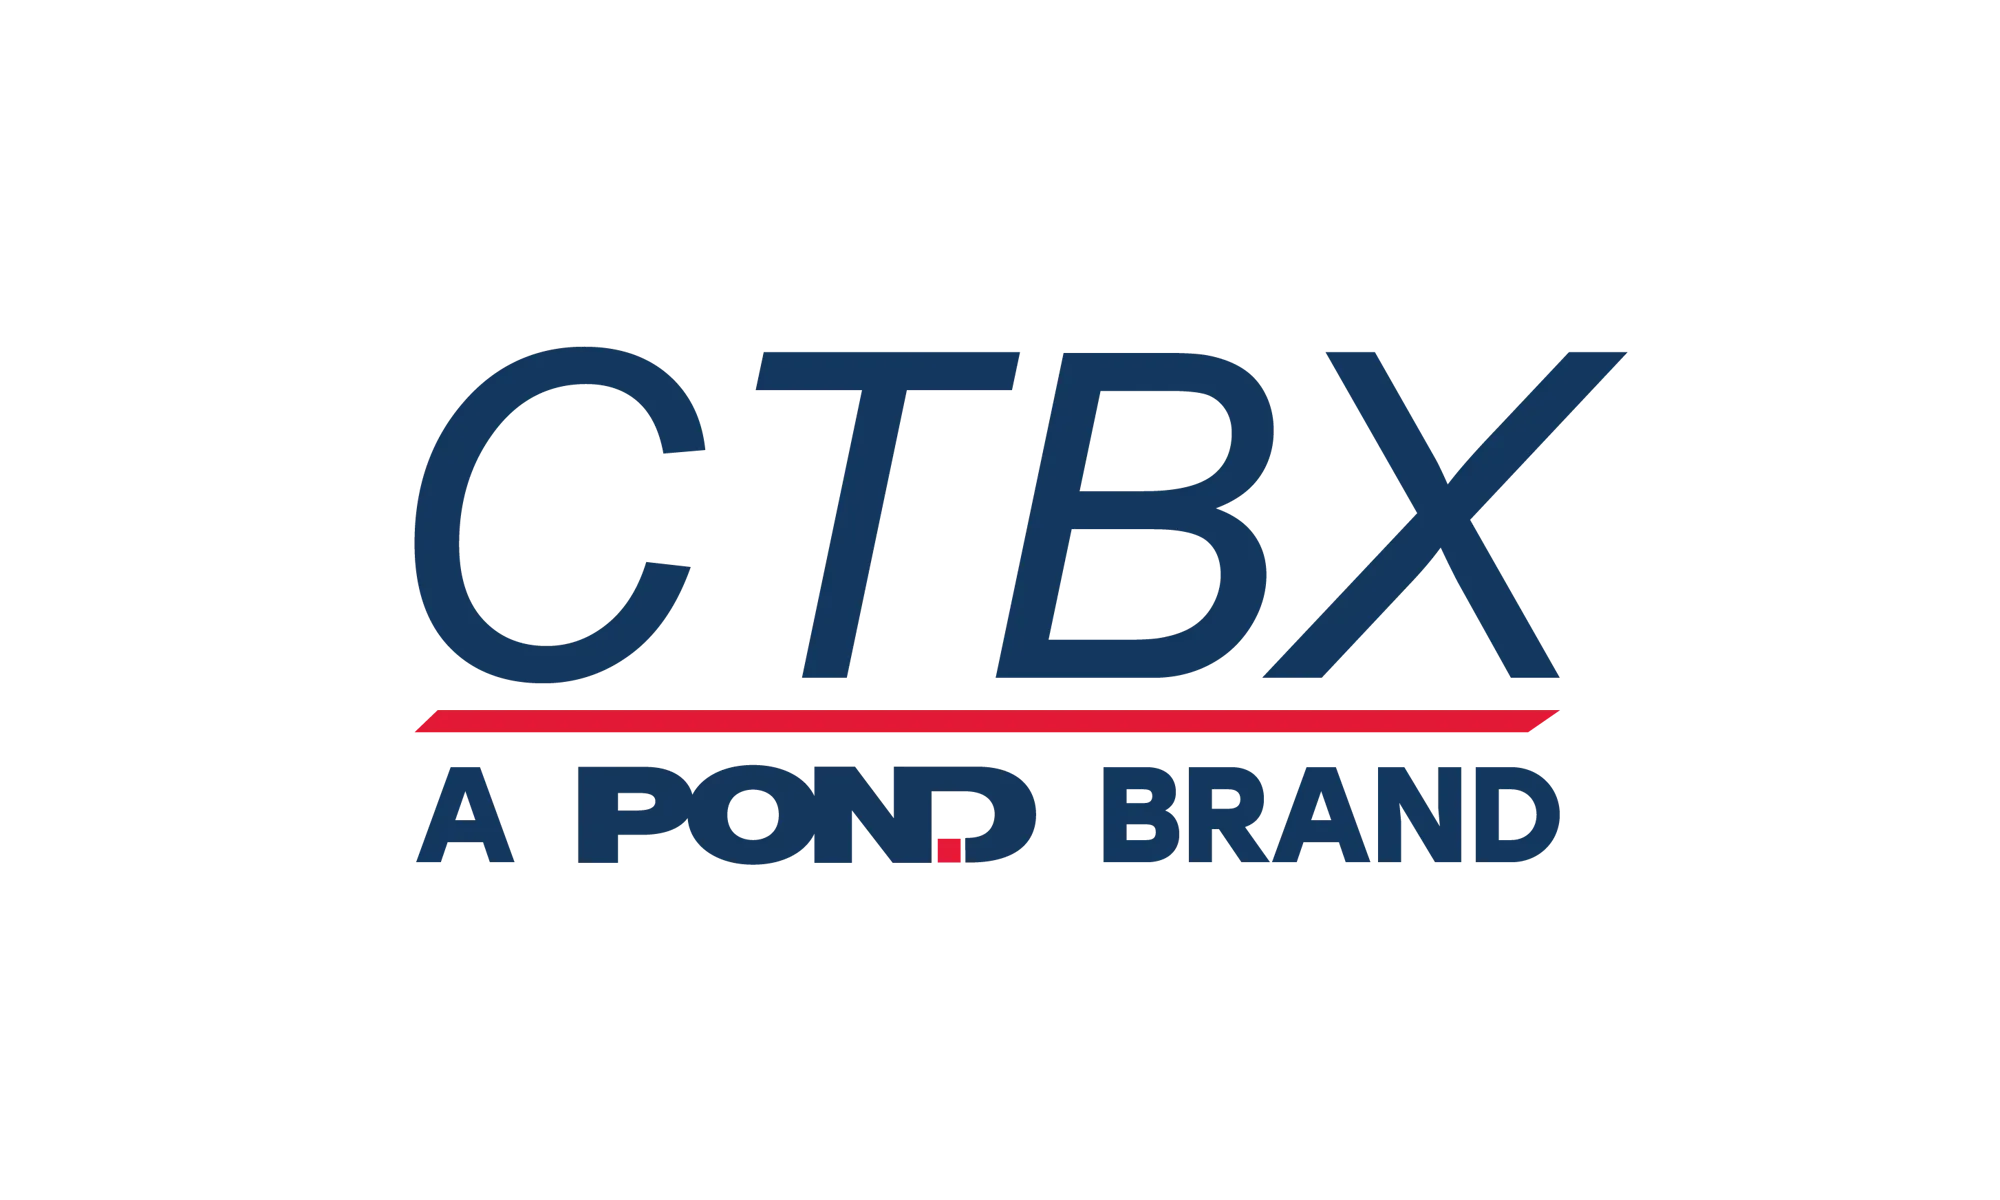 CTBX logo - a Pond brand